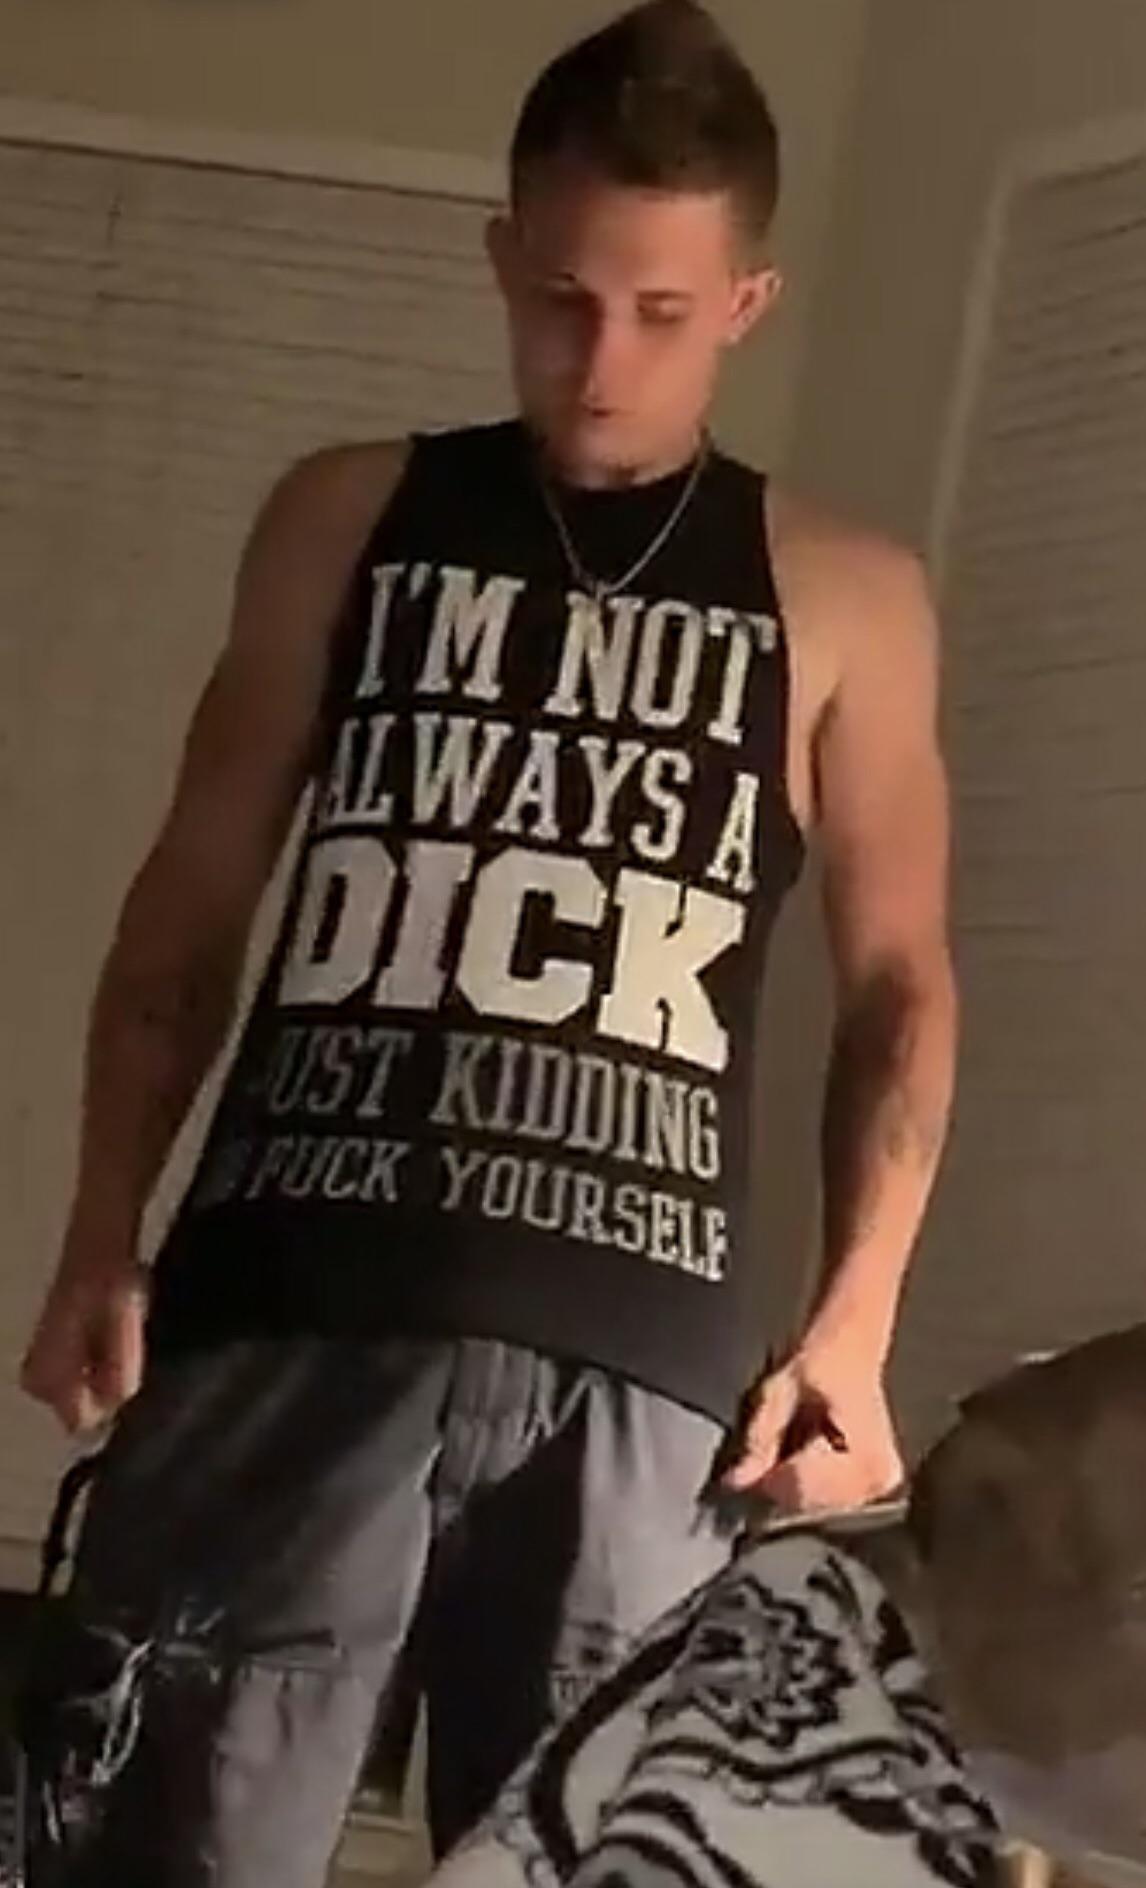 t shirt - I'M Not Always Dick Ust Kidding Uck Yourself